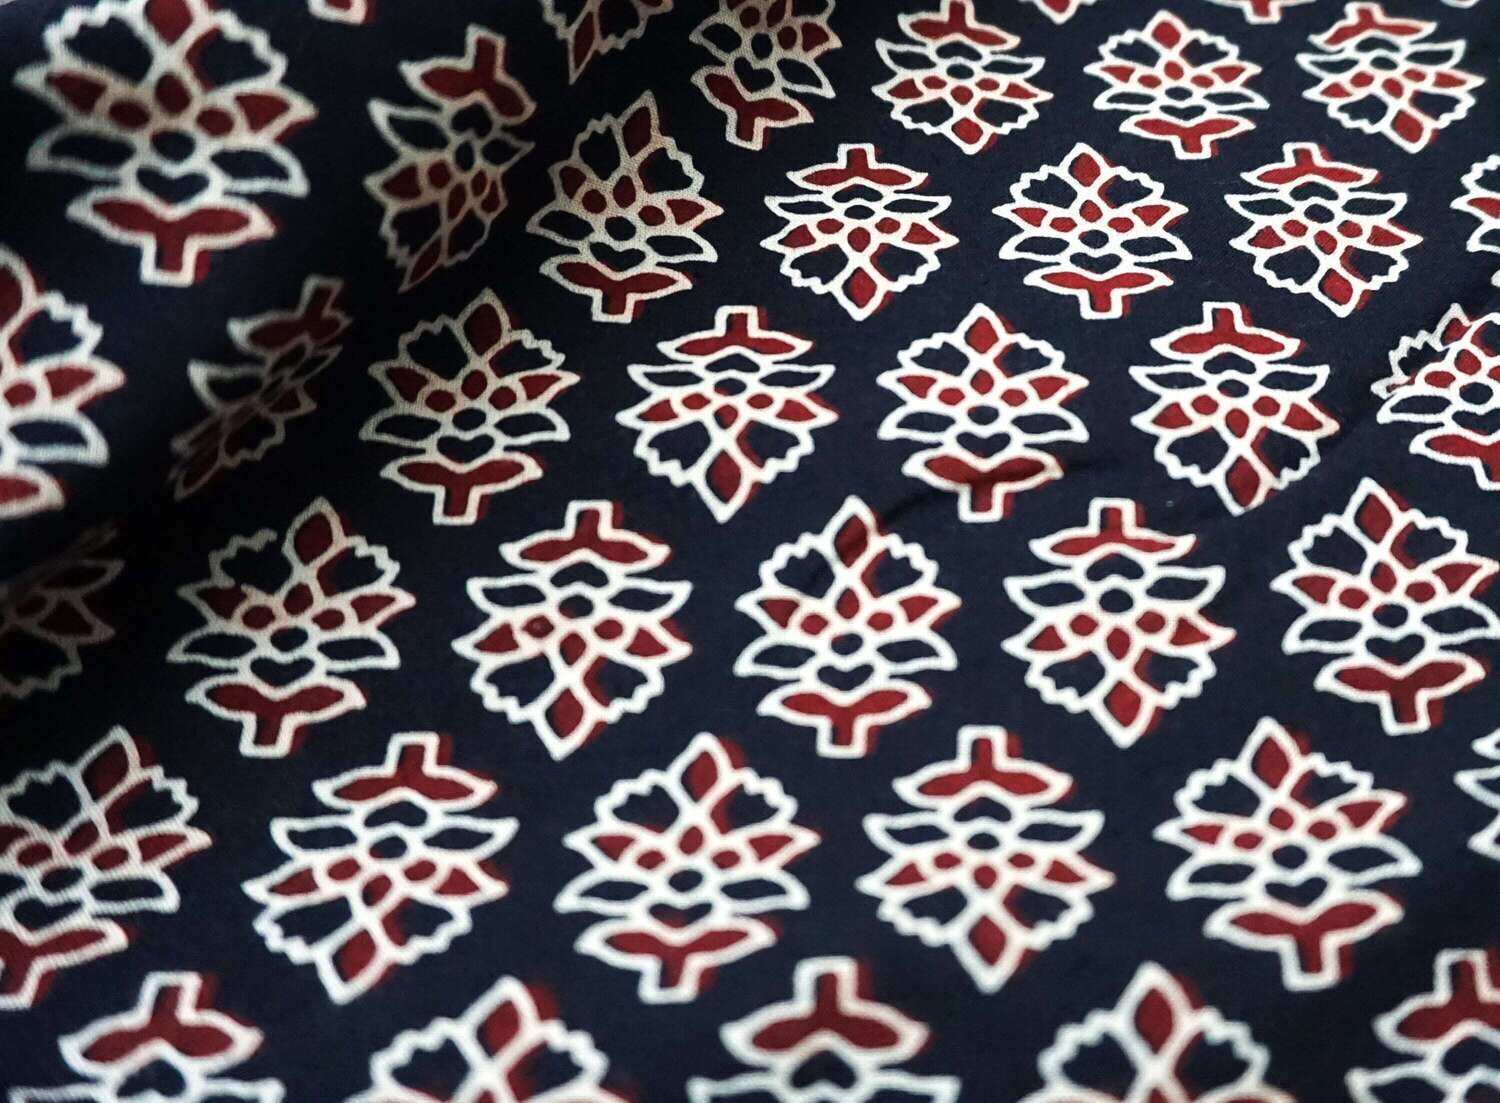 Small Floral Cotton Fabric, Kalamkari Ajrakh, Indian Block Print Fabrics, Dress Fabric, 44 Inch Wide